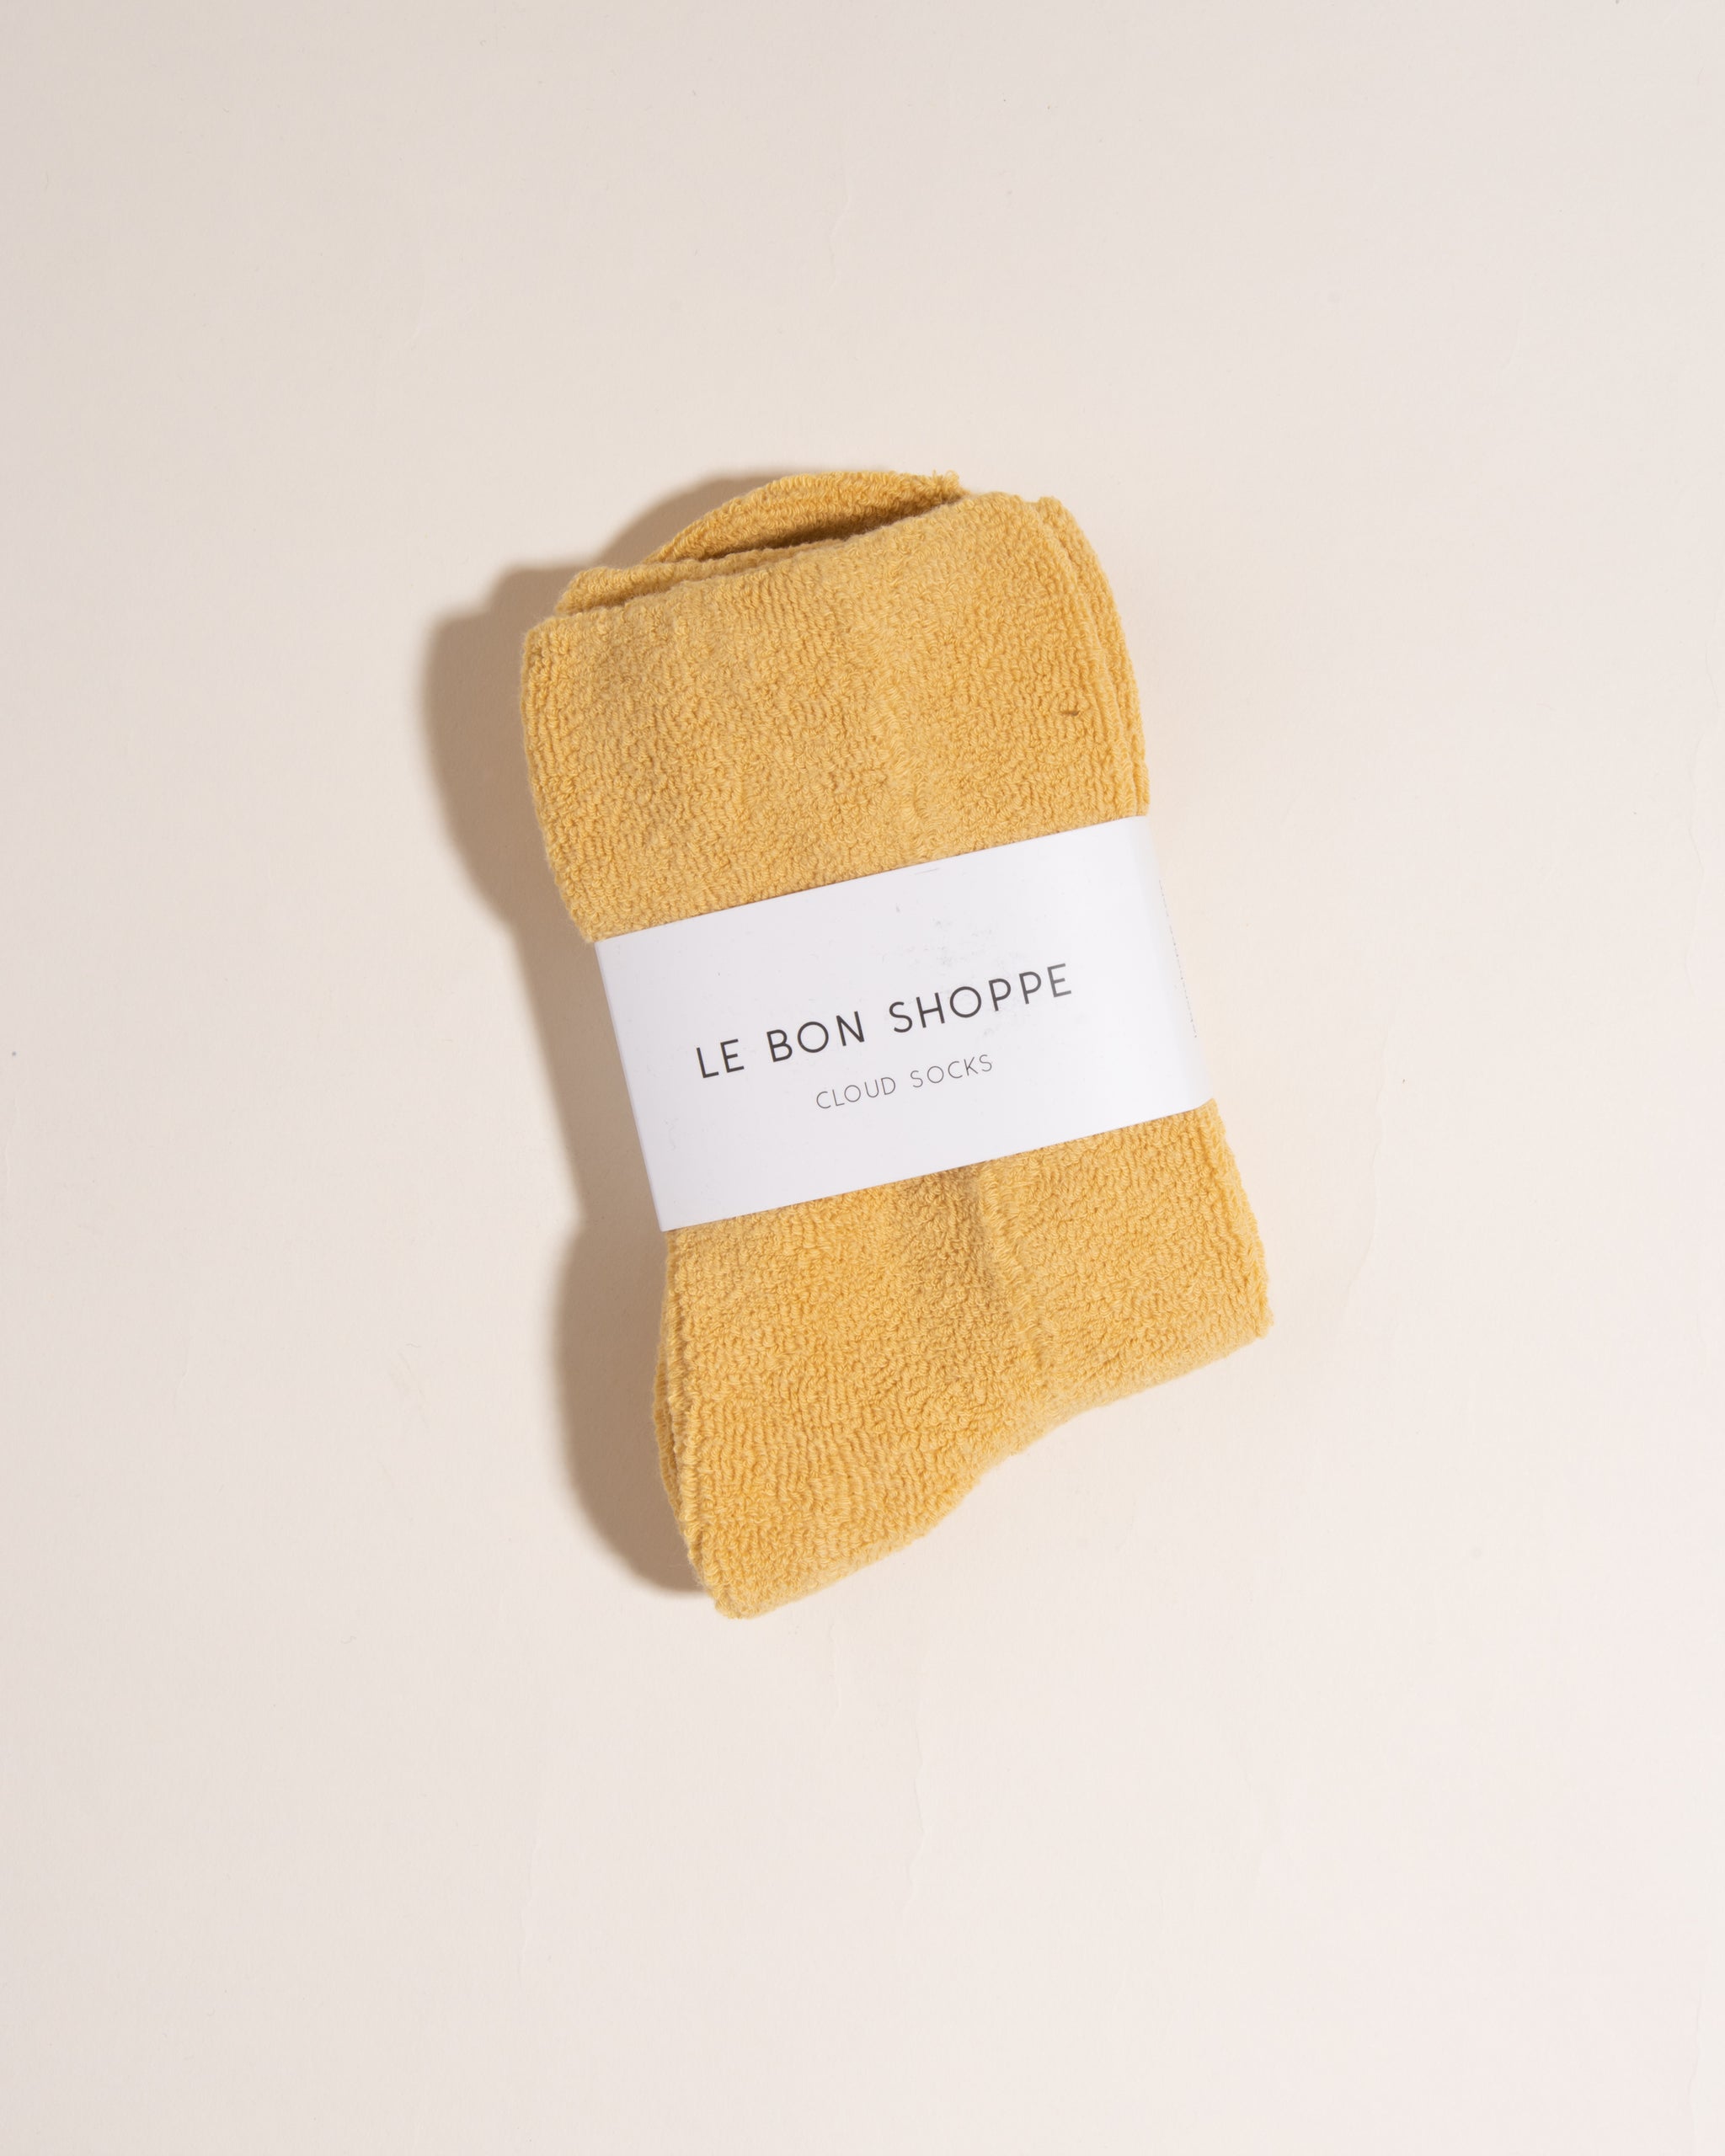 Le Bon Shoppe Cloud Sock in Honey available at Ease Toronto